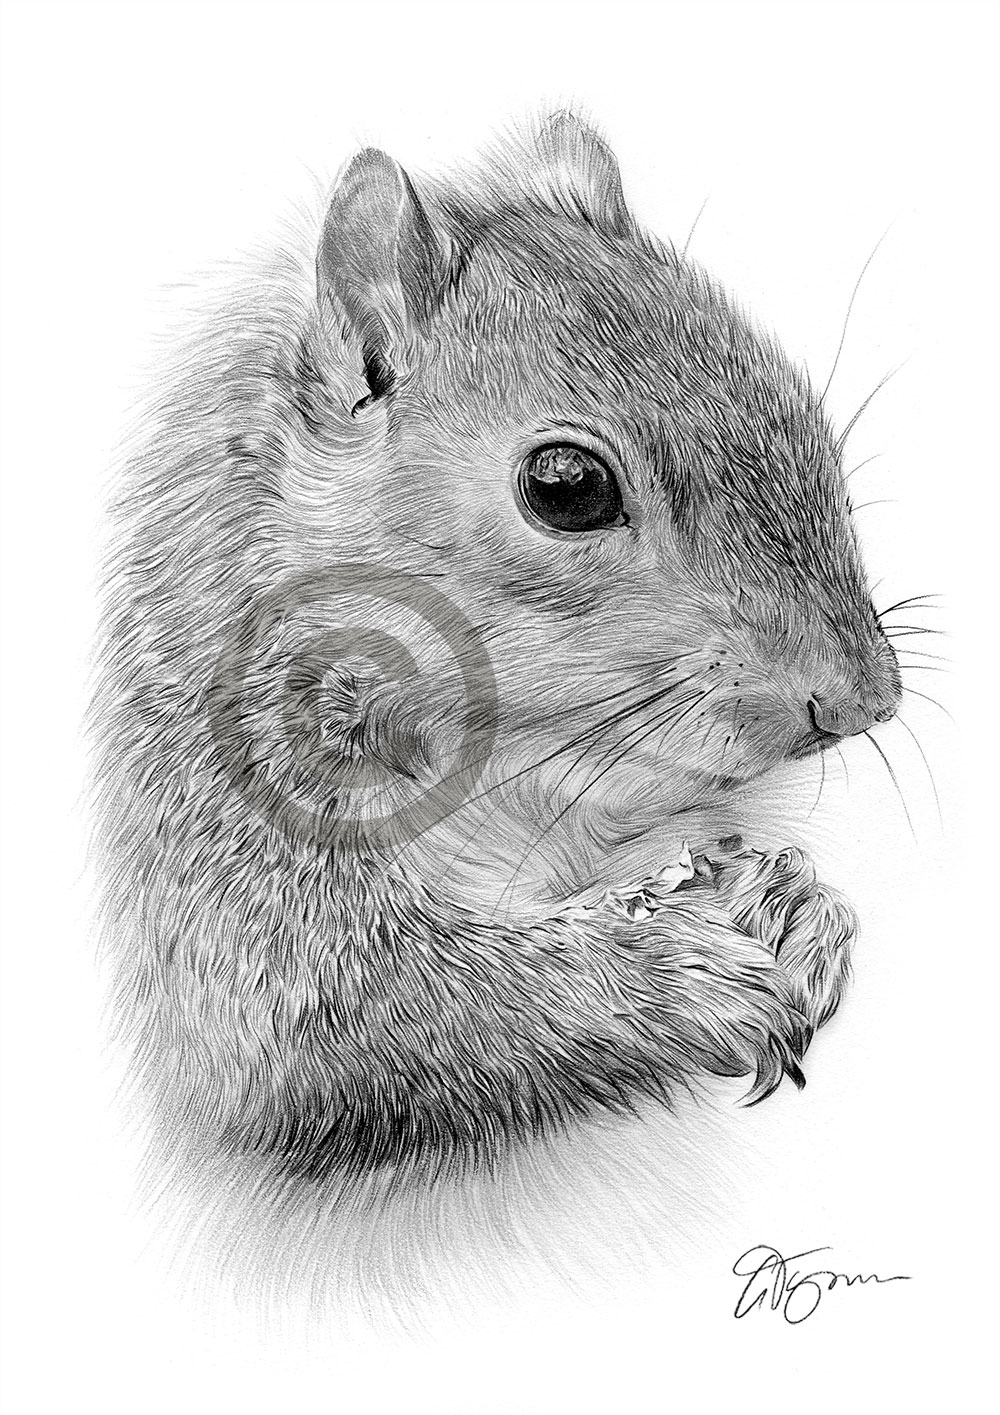 Pencil drawing of a grey squirrel by UK artist Gary Tymon